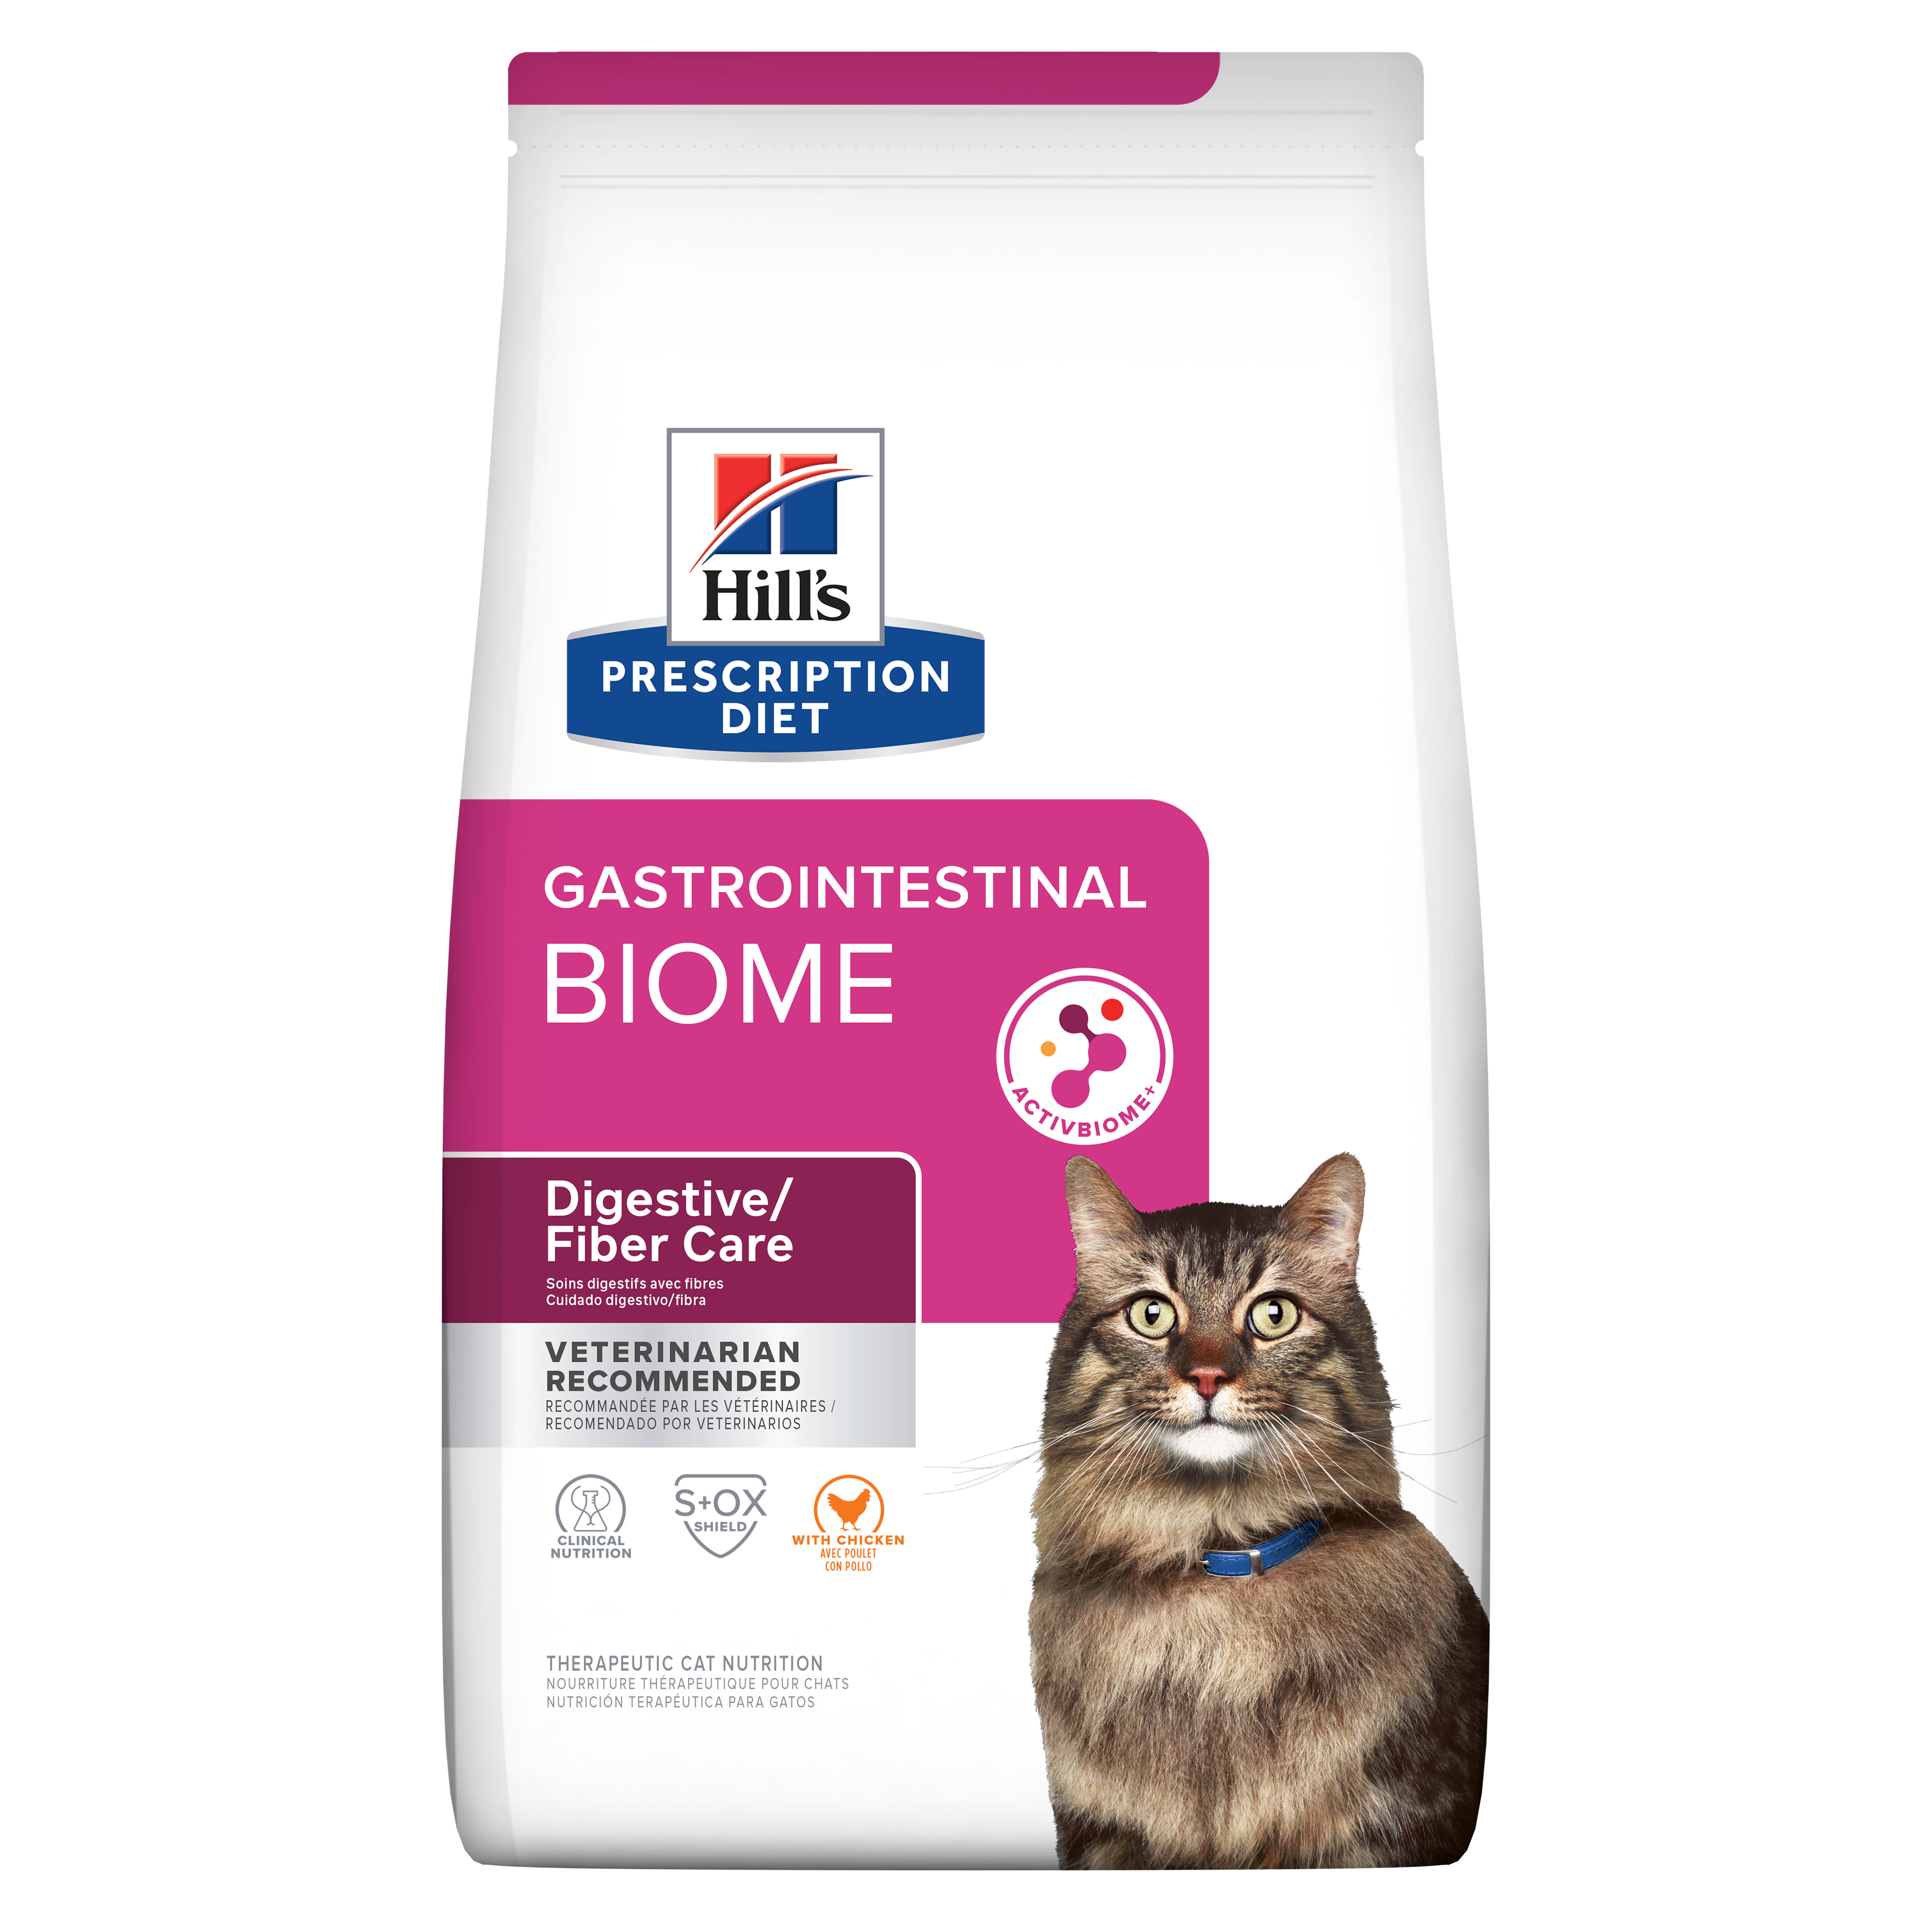 Hill's® Prescription Diet® Digestive Fiber Care Gastrointestinal Biome Feline